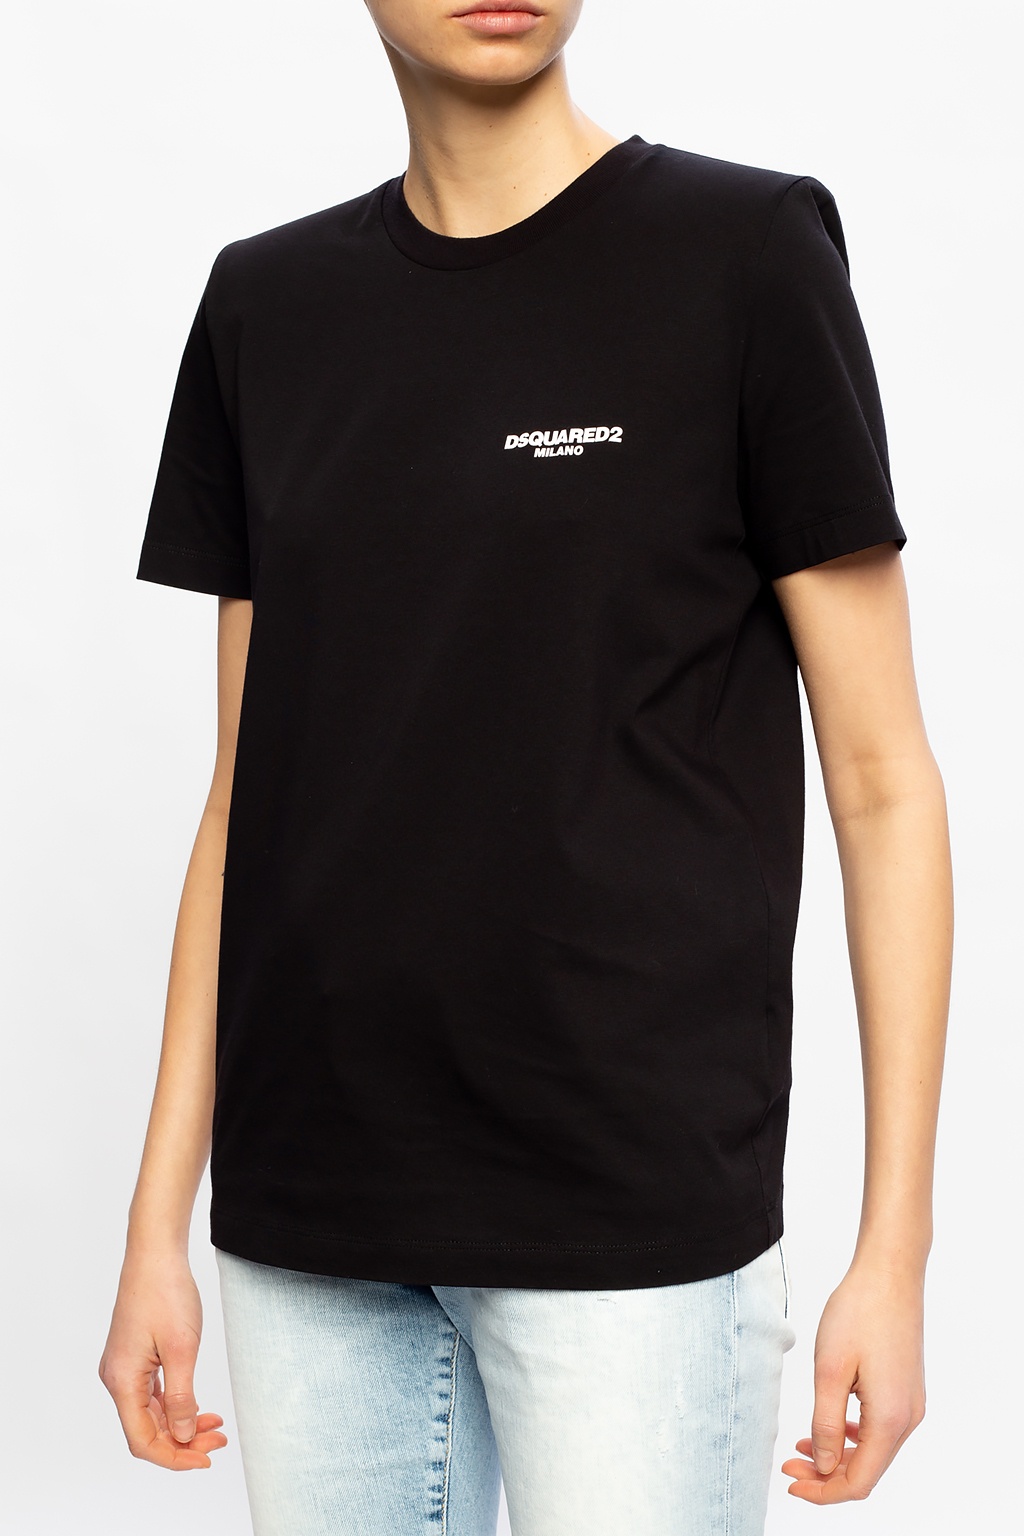 Dsquared2 Printed T-shirt | Women's Clothing | IetpShops